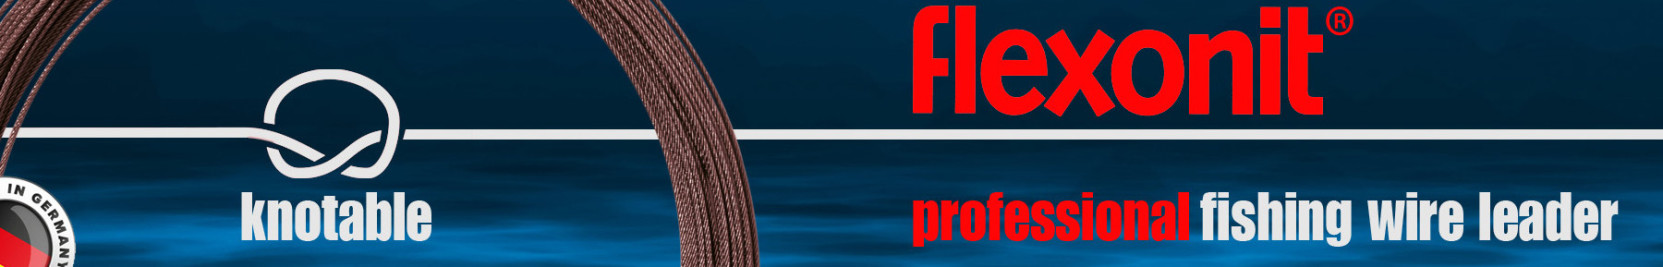 Flexonit.com Fishing Wire Leader Banner